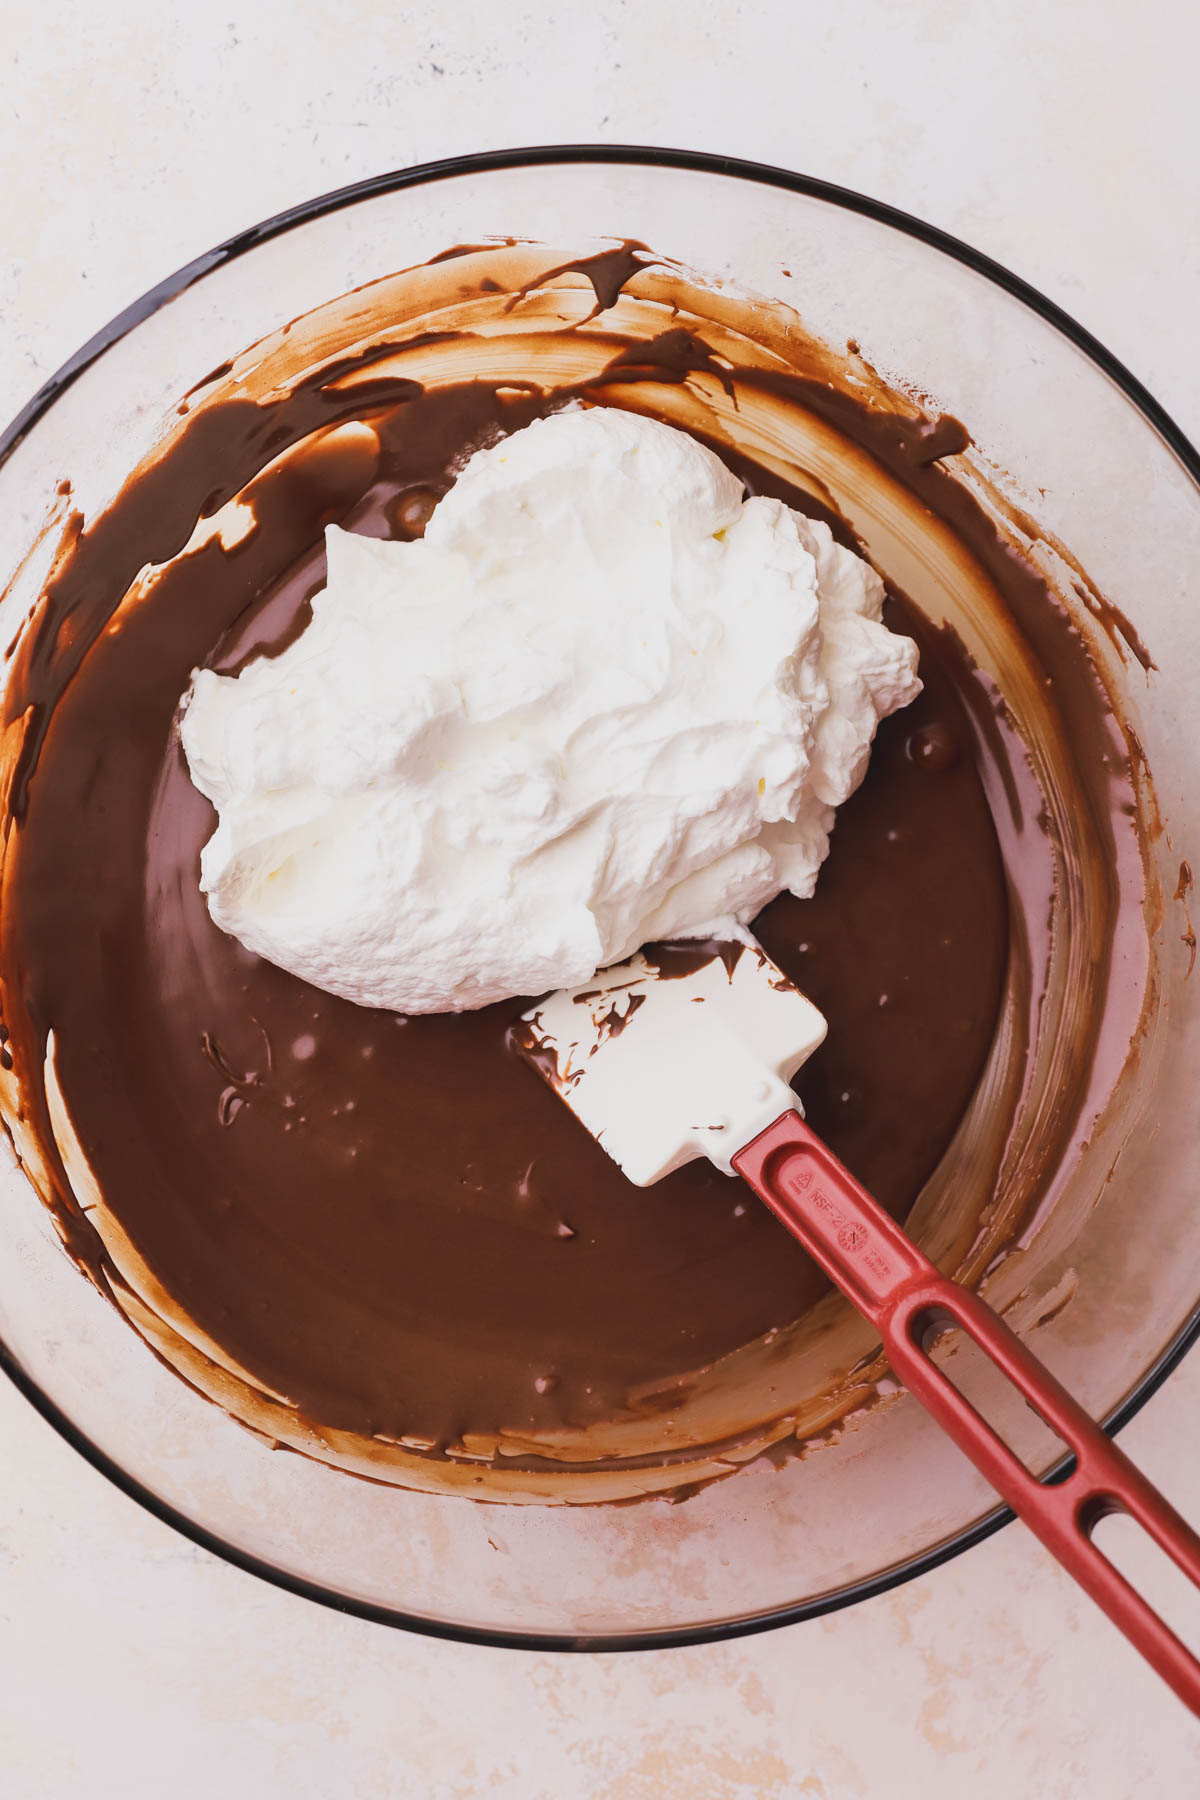 Whipped cream and chocolate mixture. 